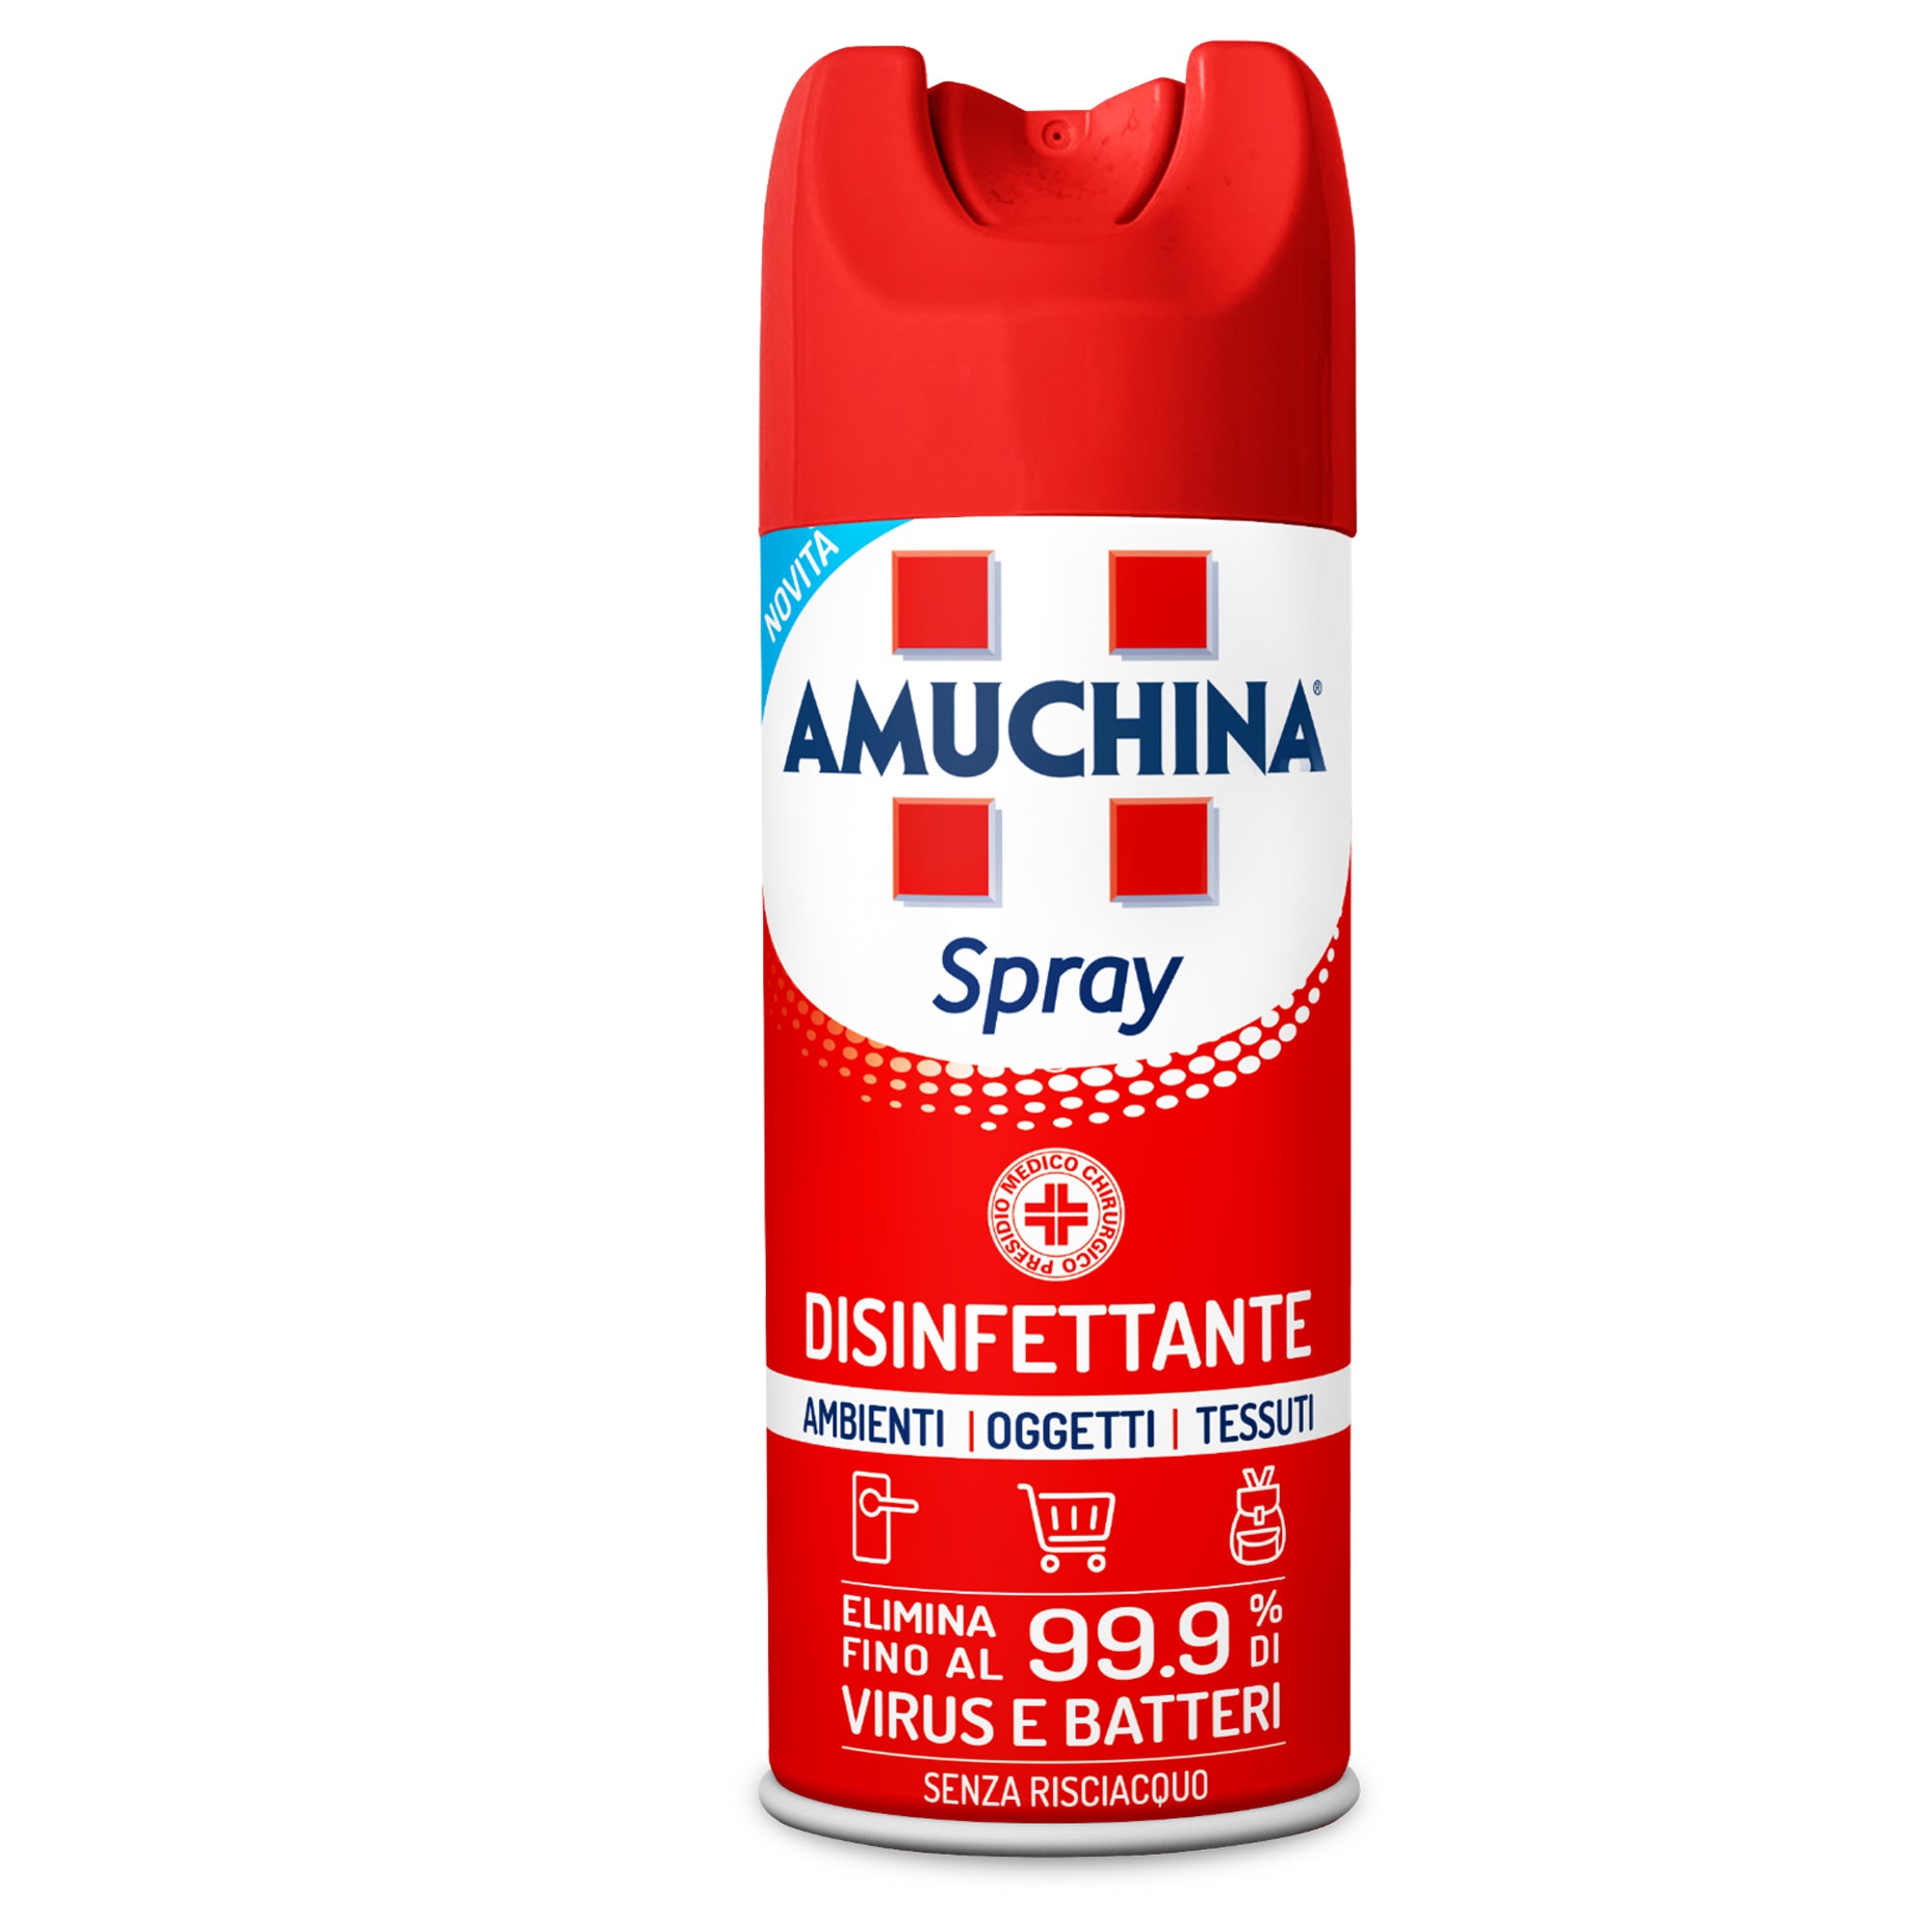 amuchina-professional-amuchina-spray-disinfettante-ambienti-oggetti-tessuti-400ml